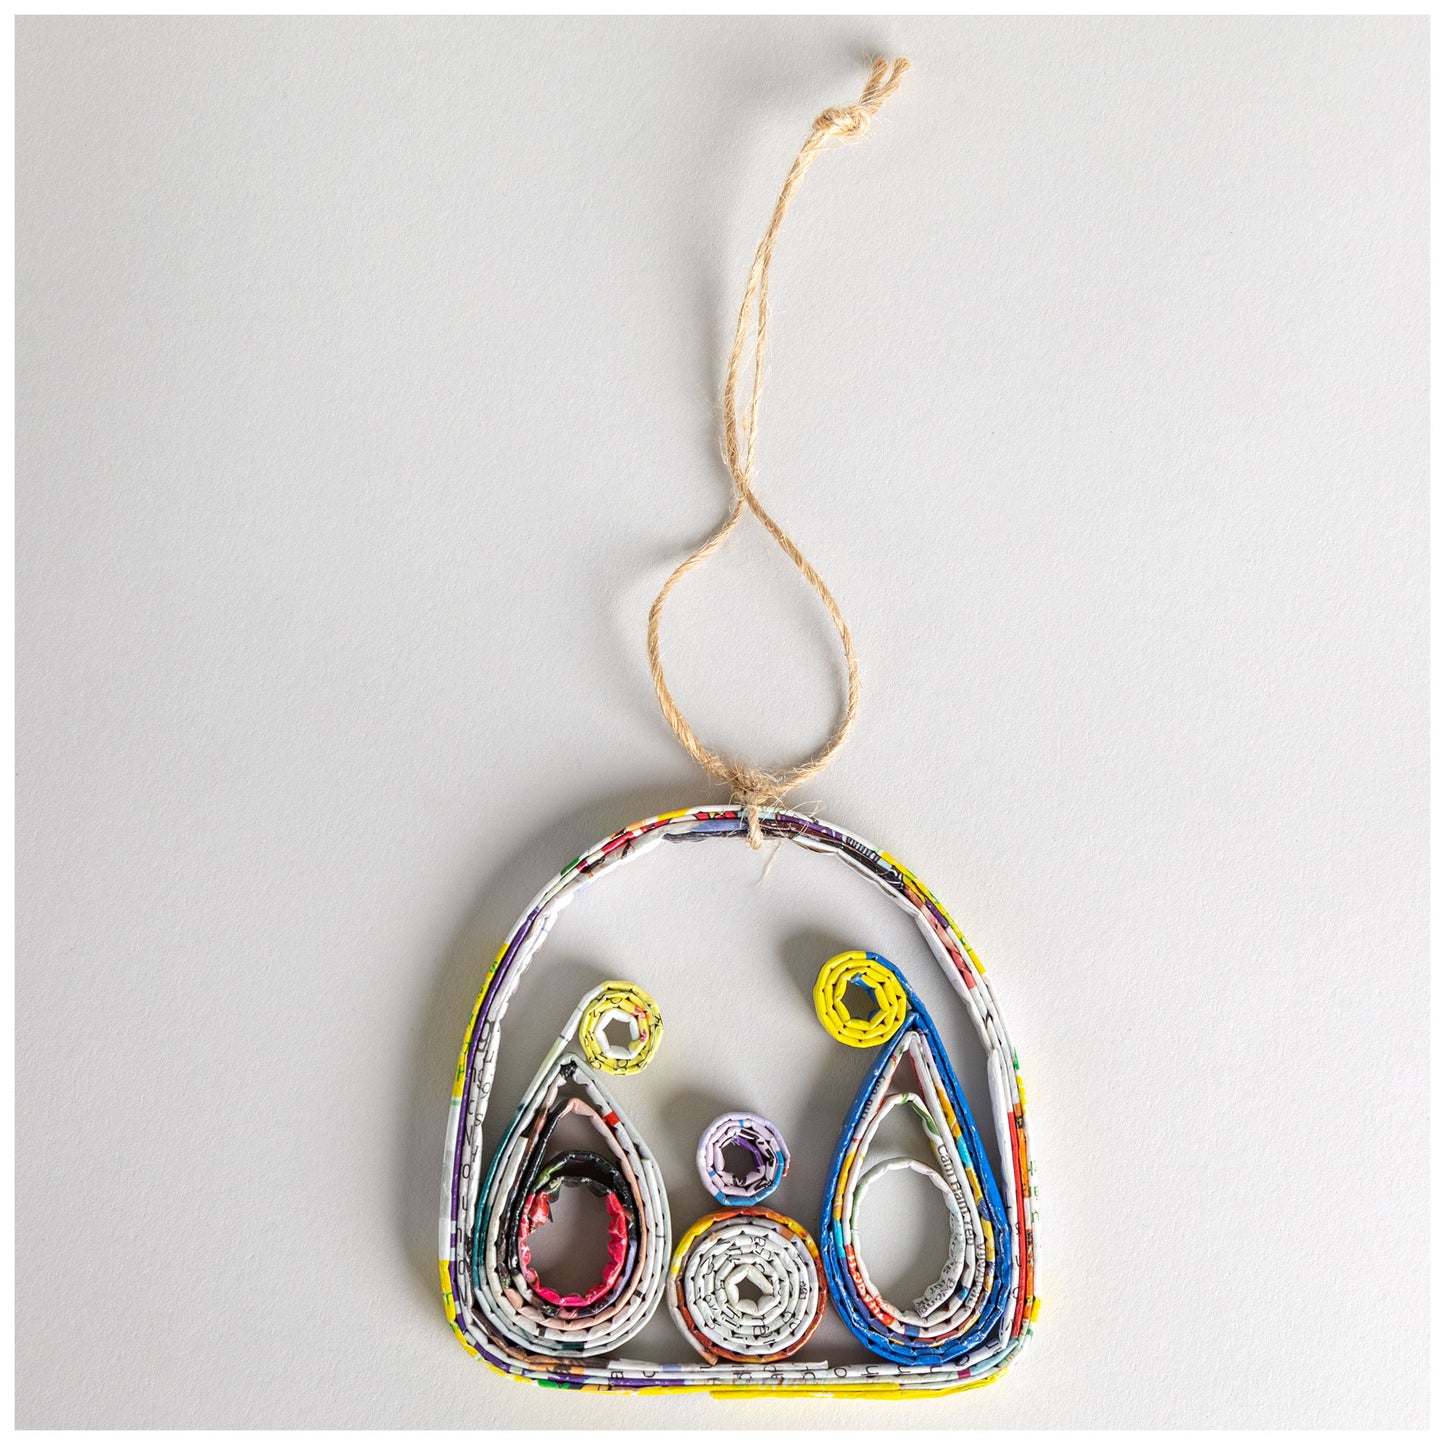 Recycled Magazine Ornament | Handmade, Fair Trade